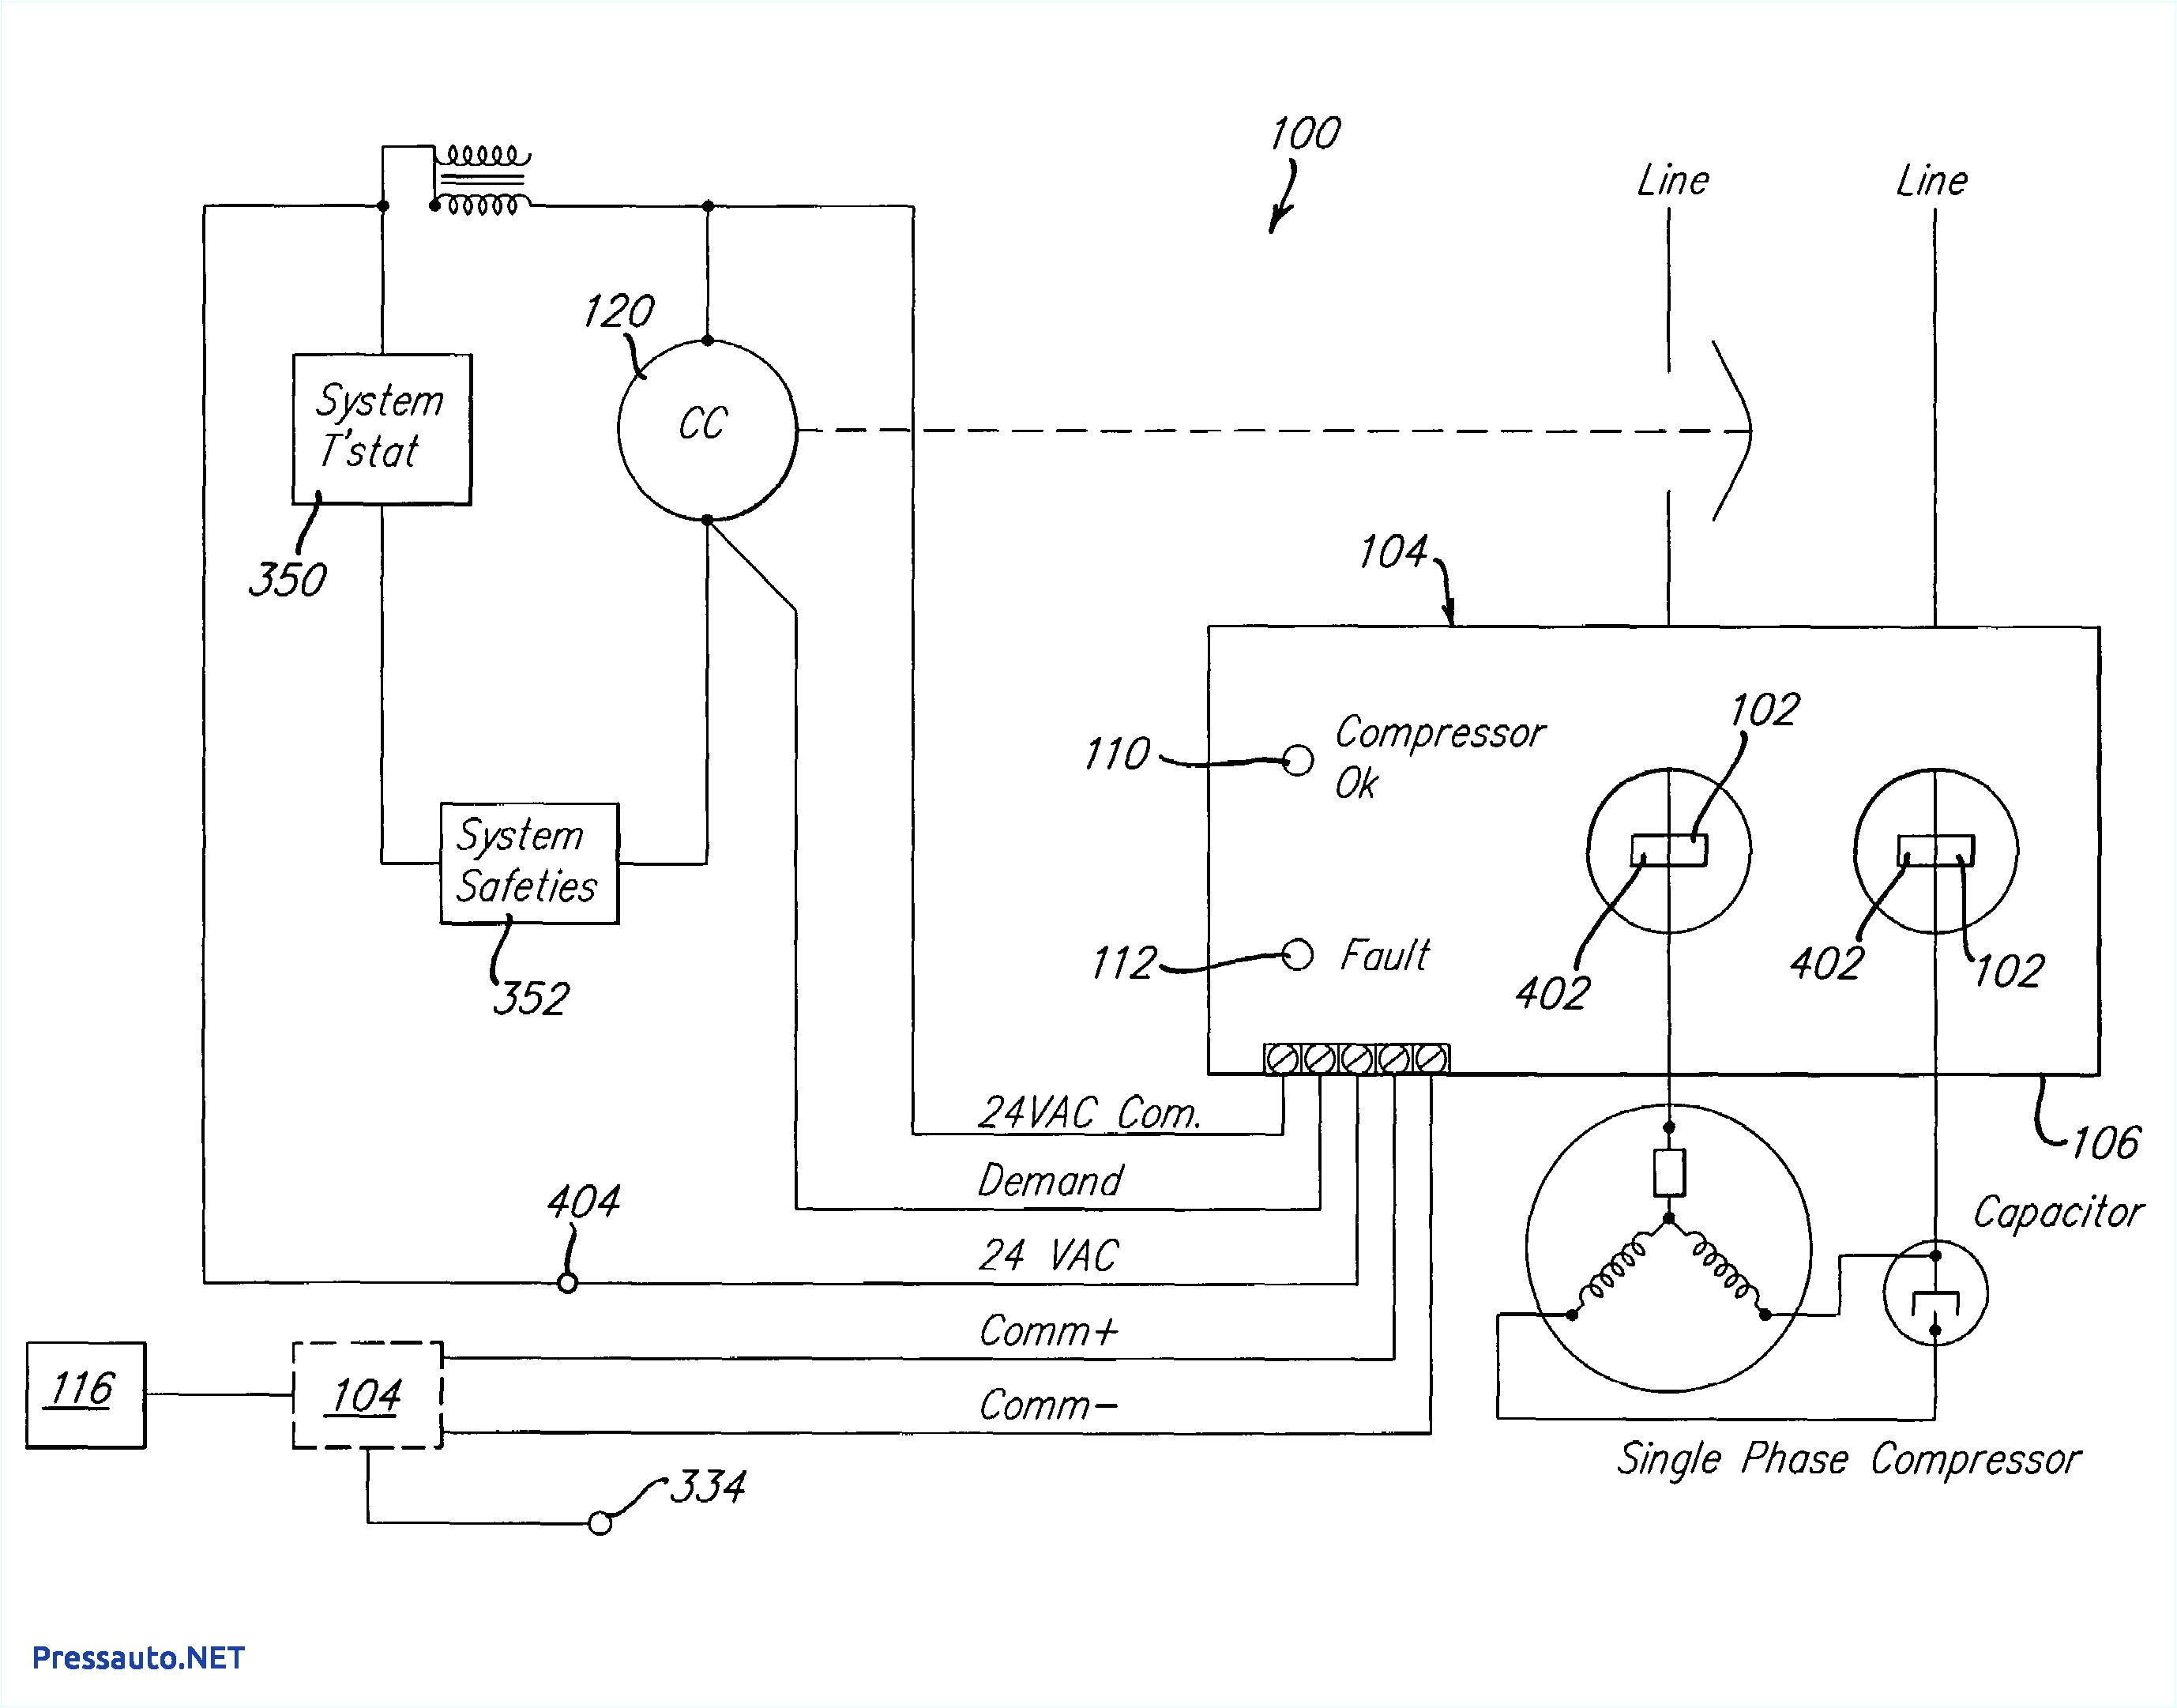 emerson compressor motor wiring diagram wiring diagram namedoerr single phase wiring diagram wiring diagram mega emerson